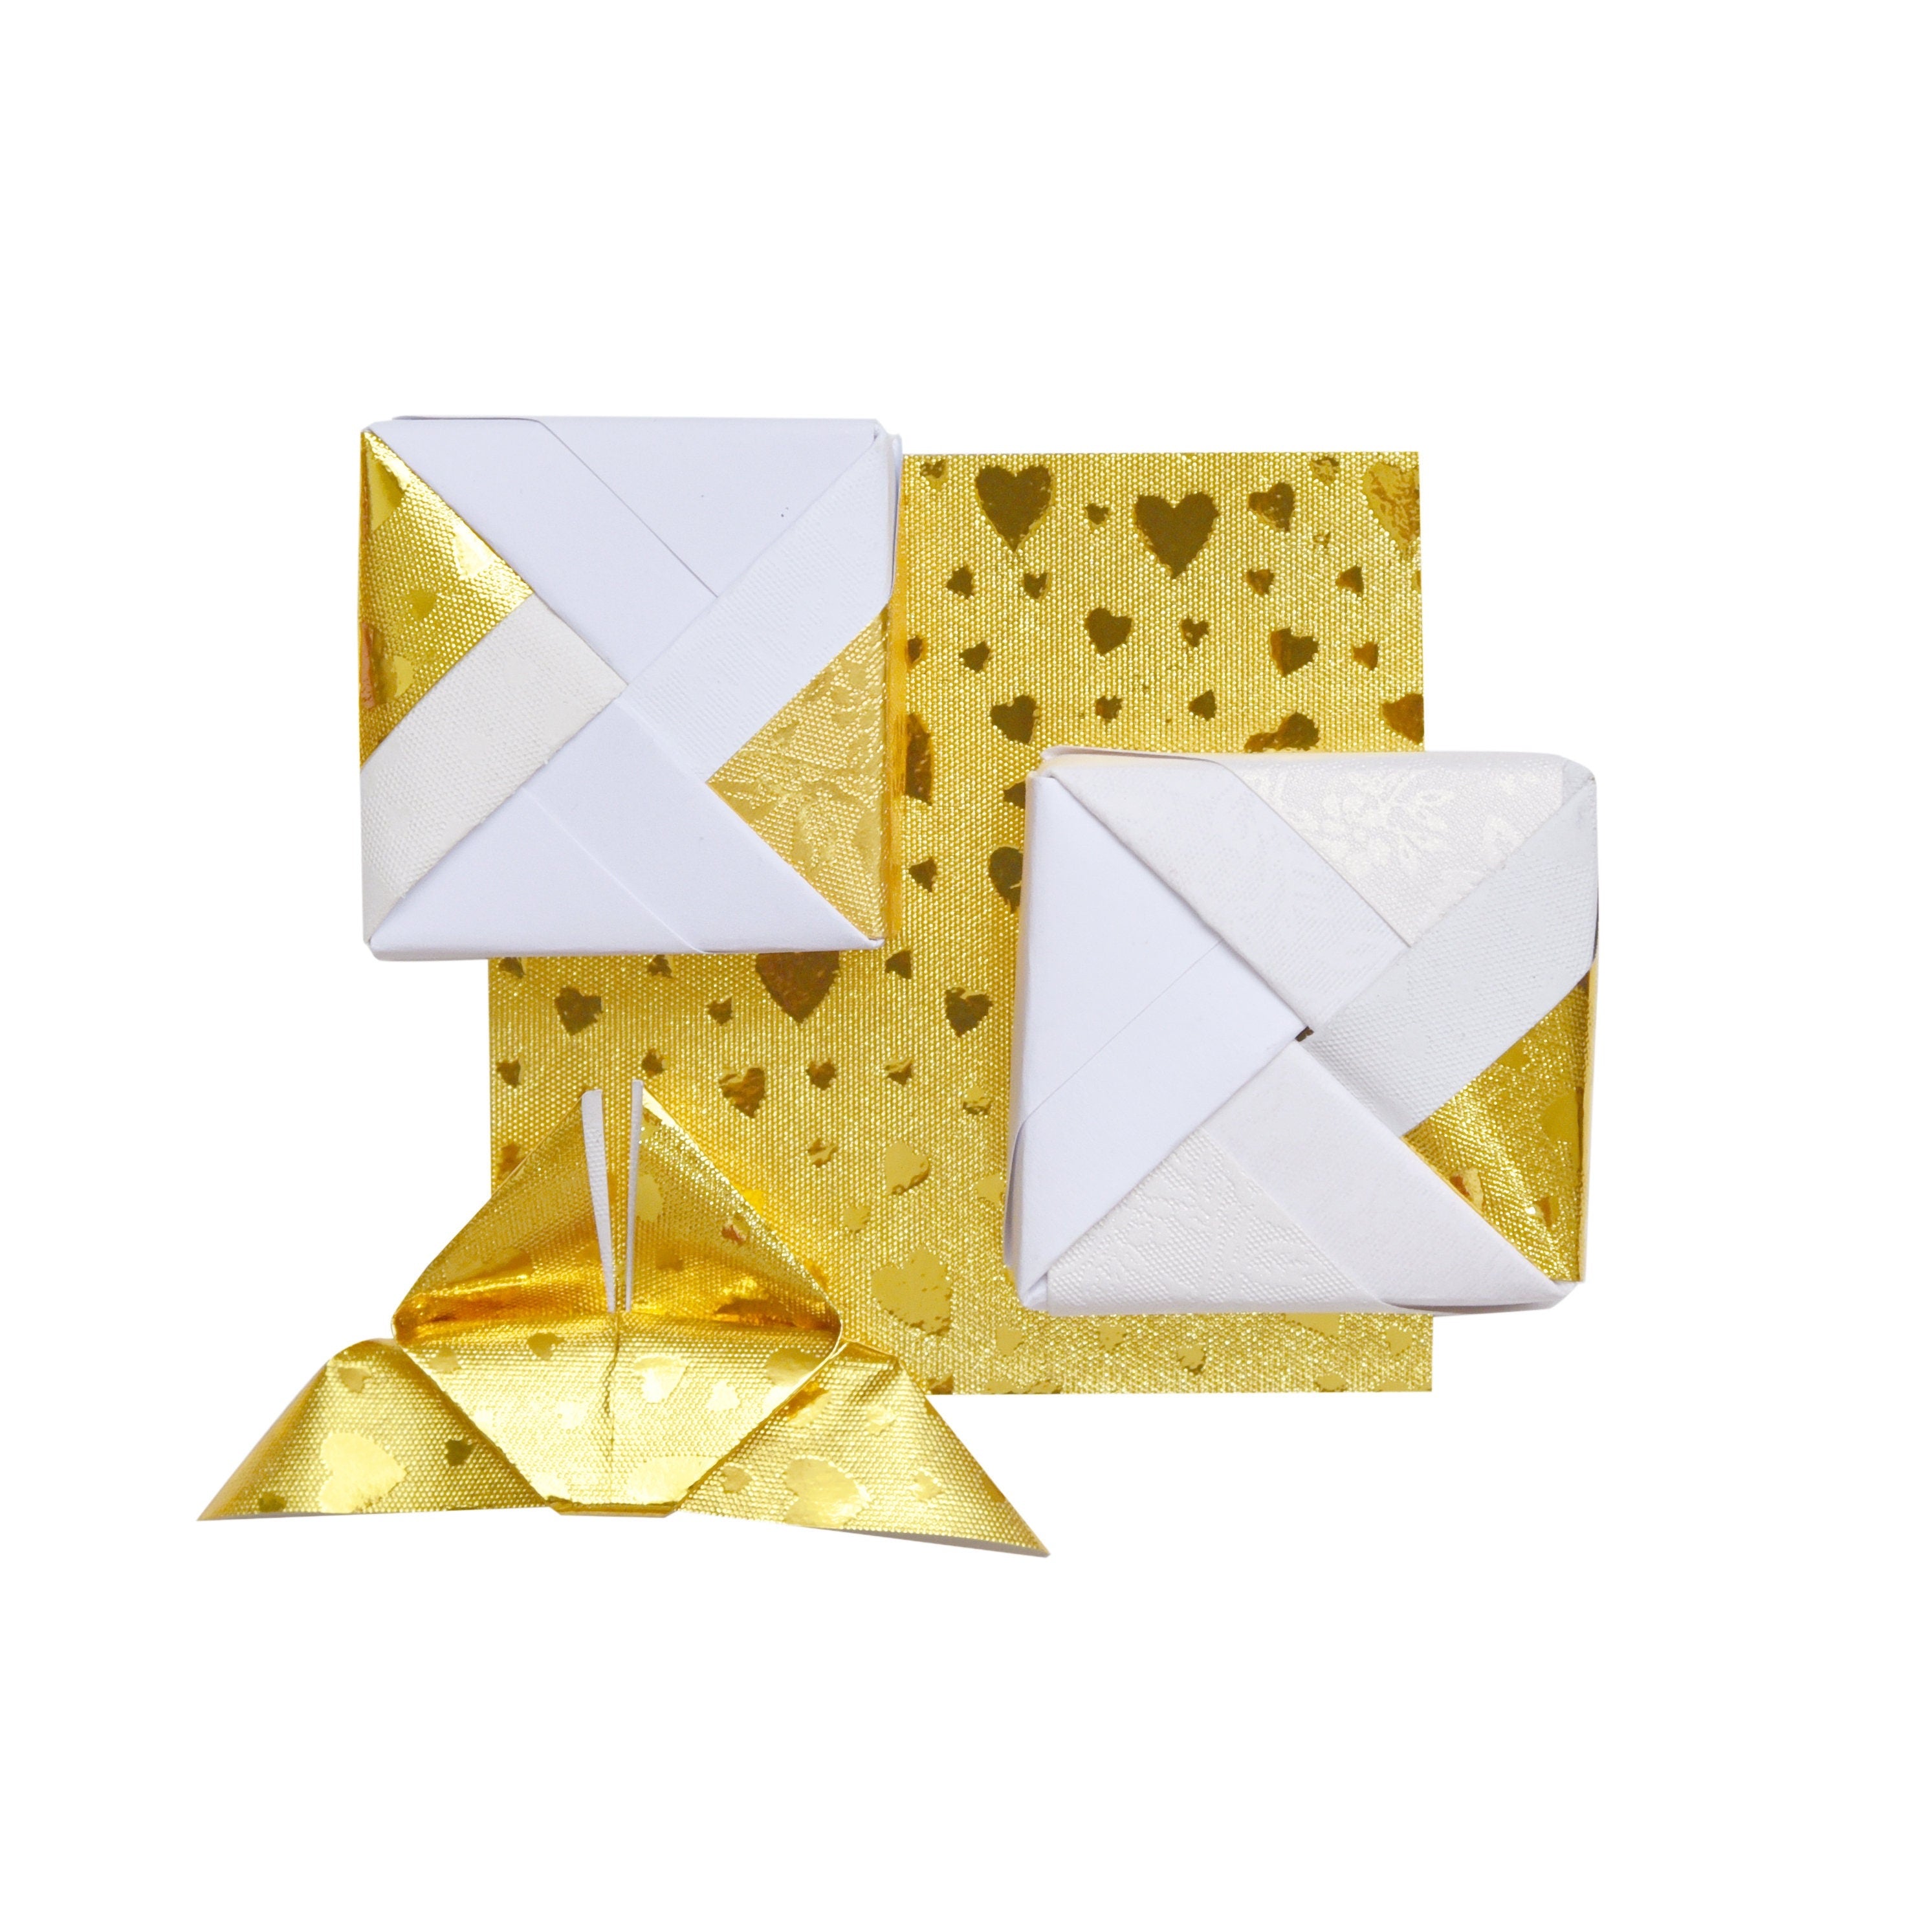 100 fogli di carta per origami a cuore dorato - 3x3 pollici - per carta pieghevole, gru per origami, decorazioni per origami